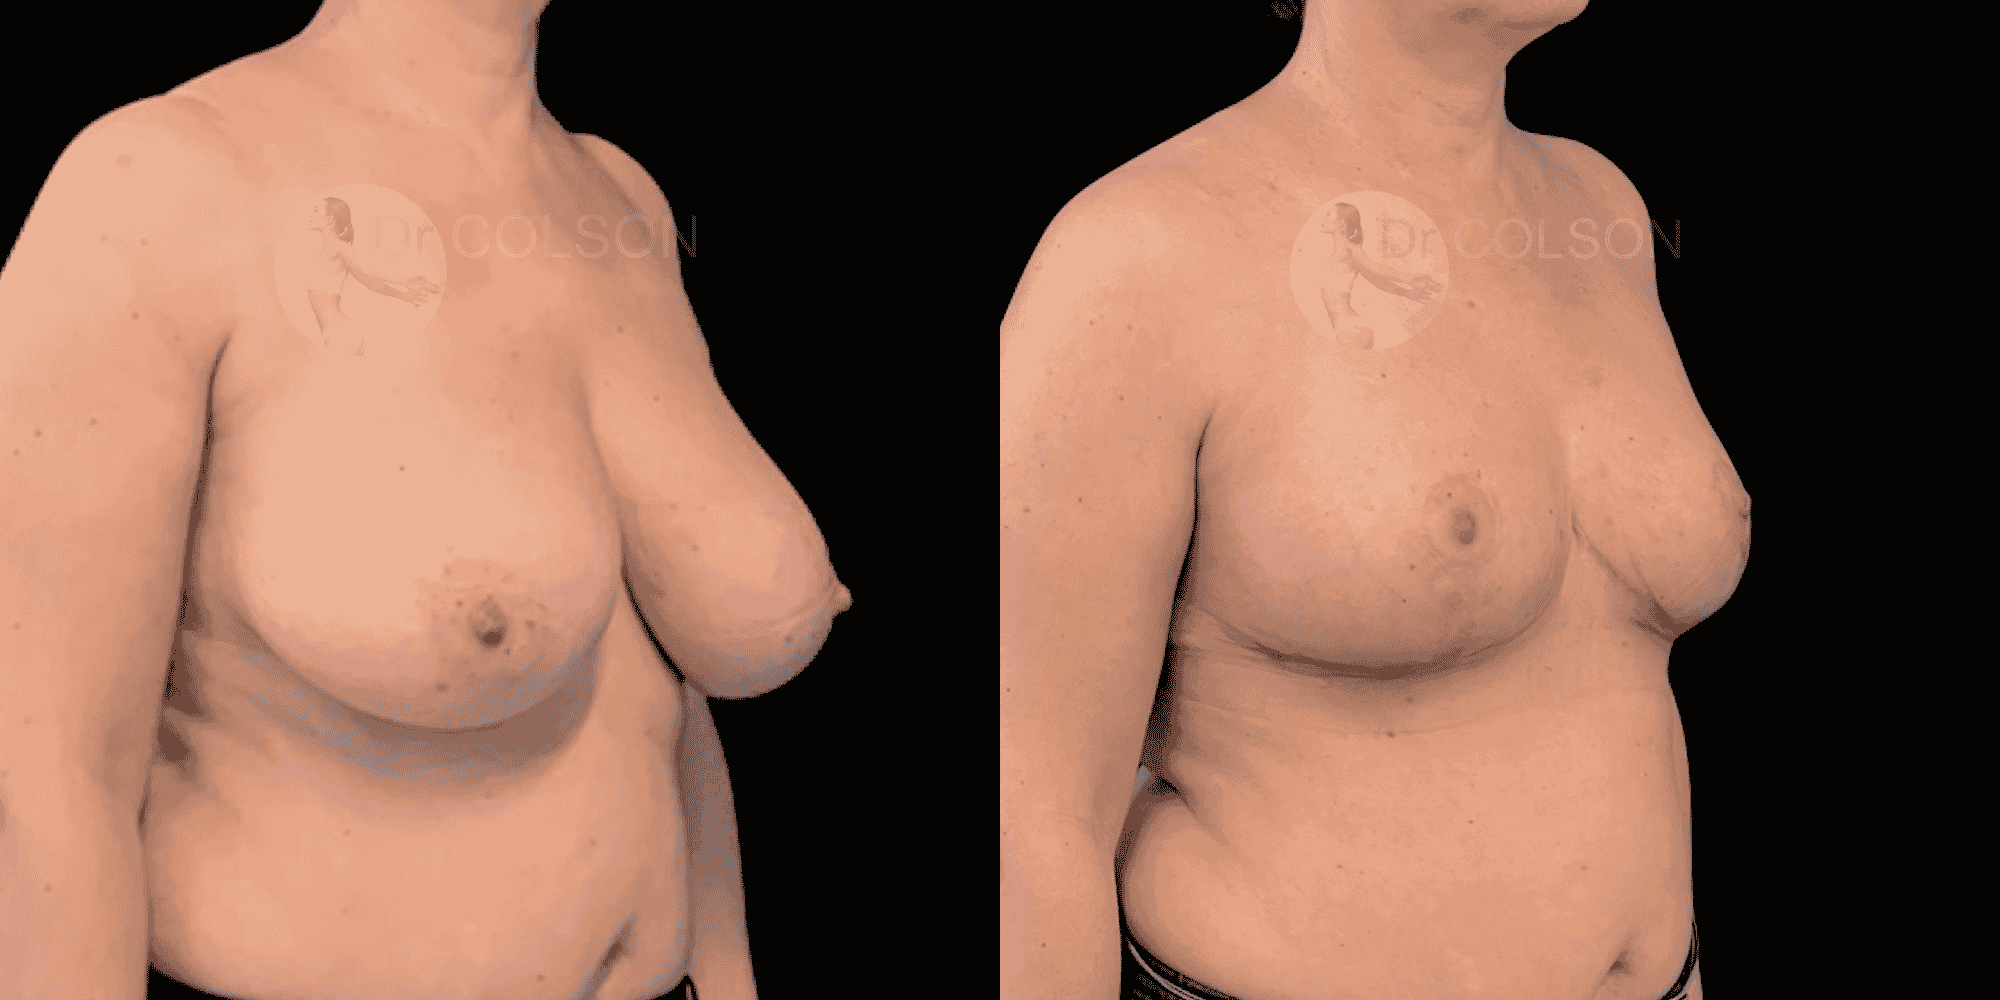 Dr Colson - Chirurgie sein - Reduction Mammaire Trois Quart